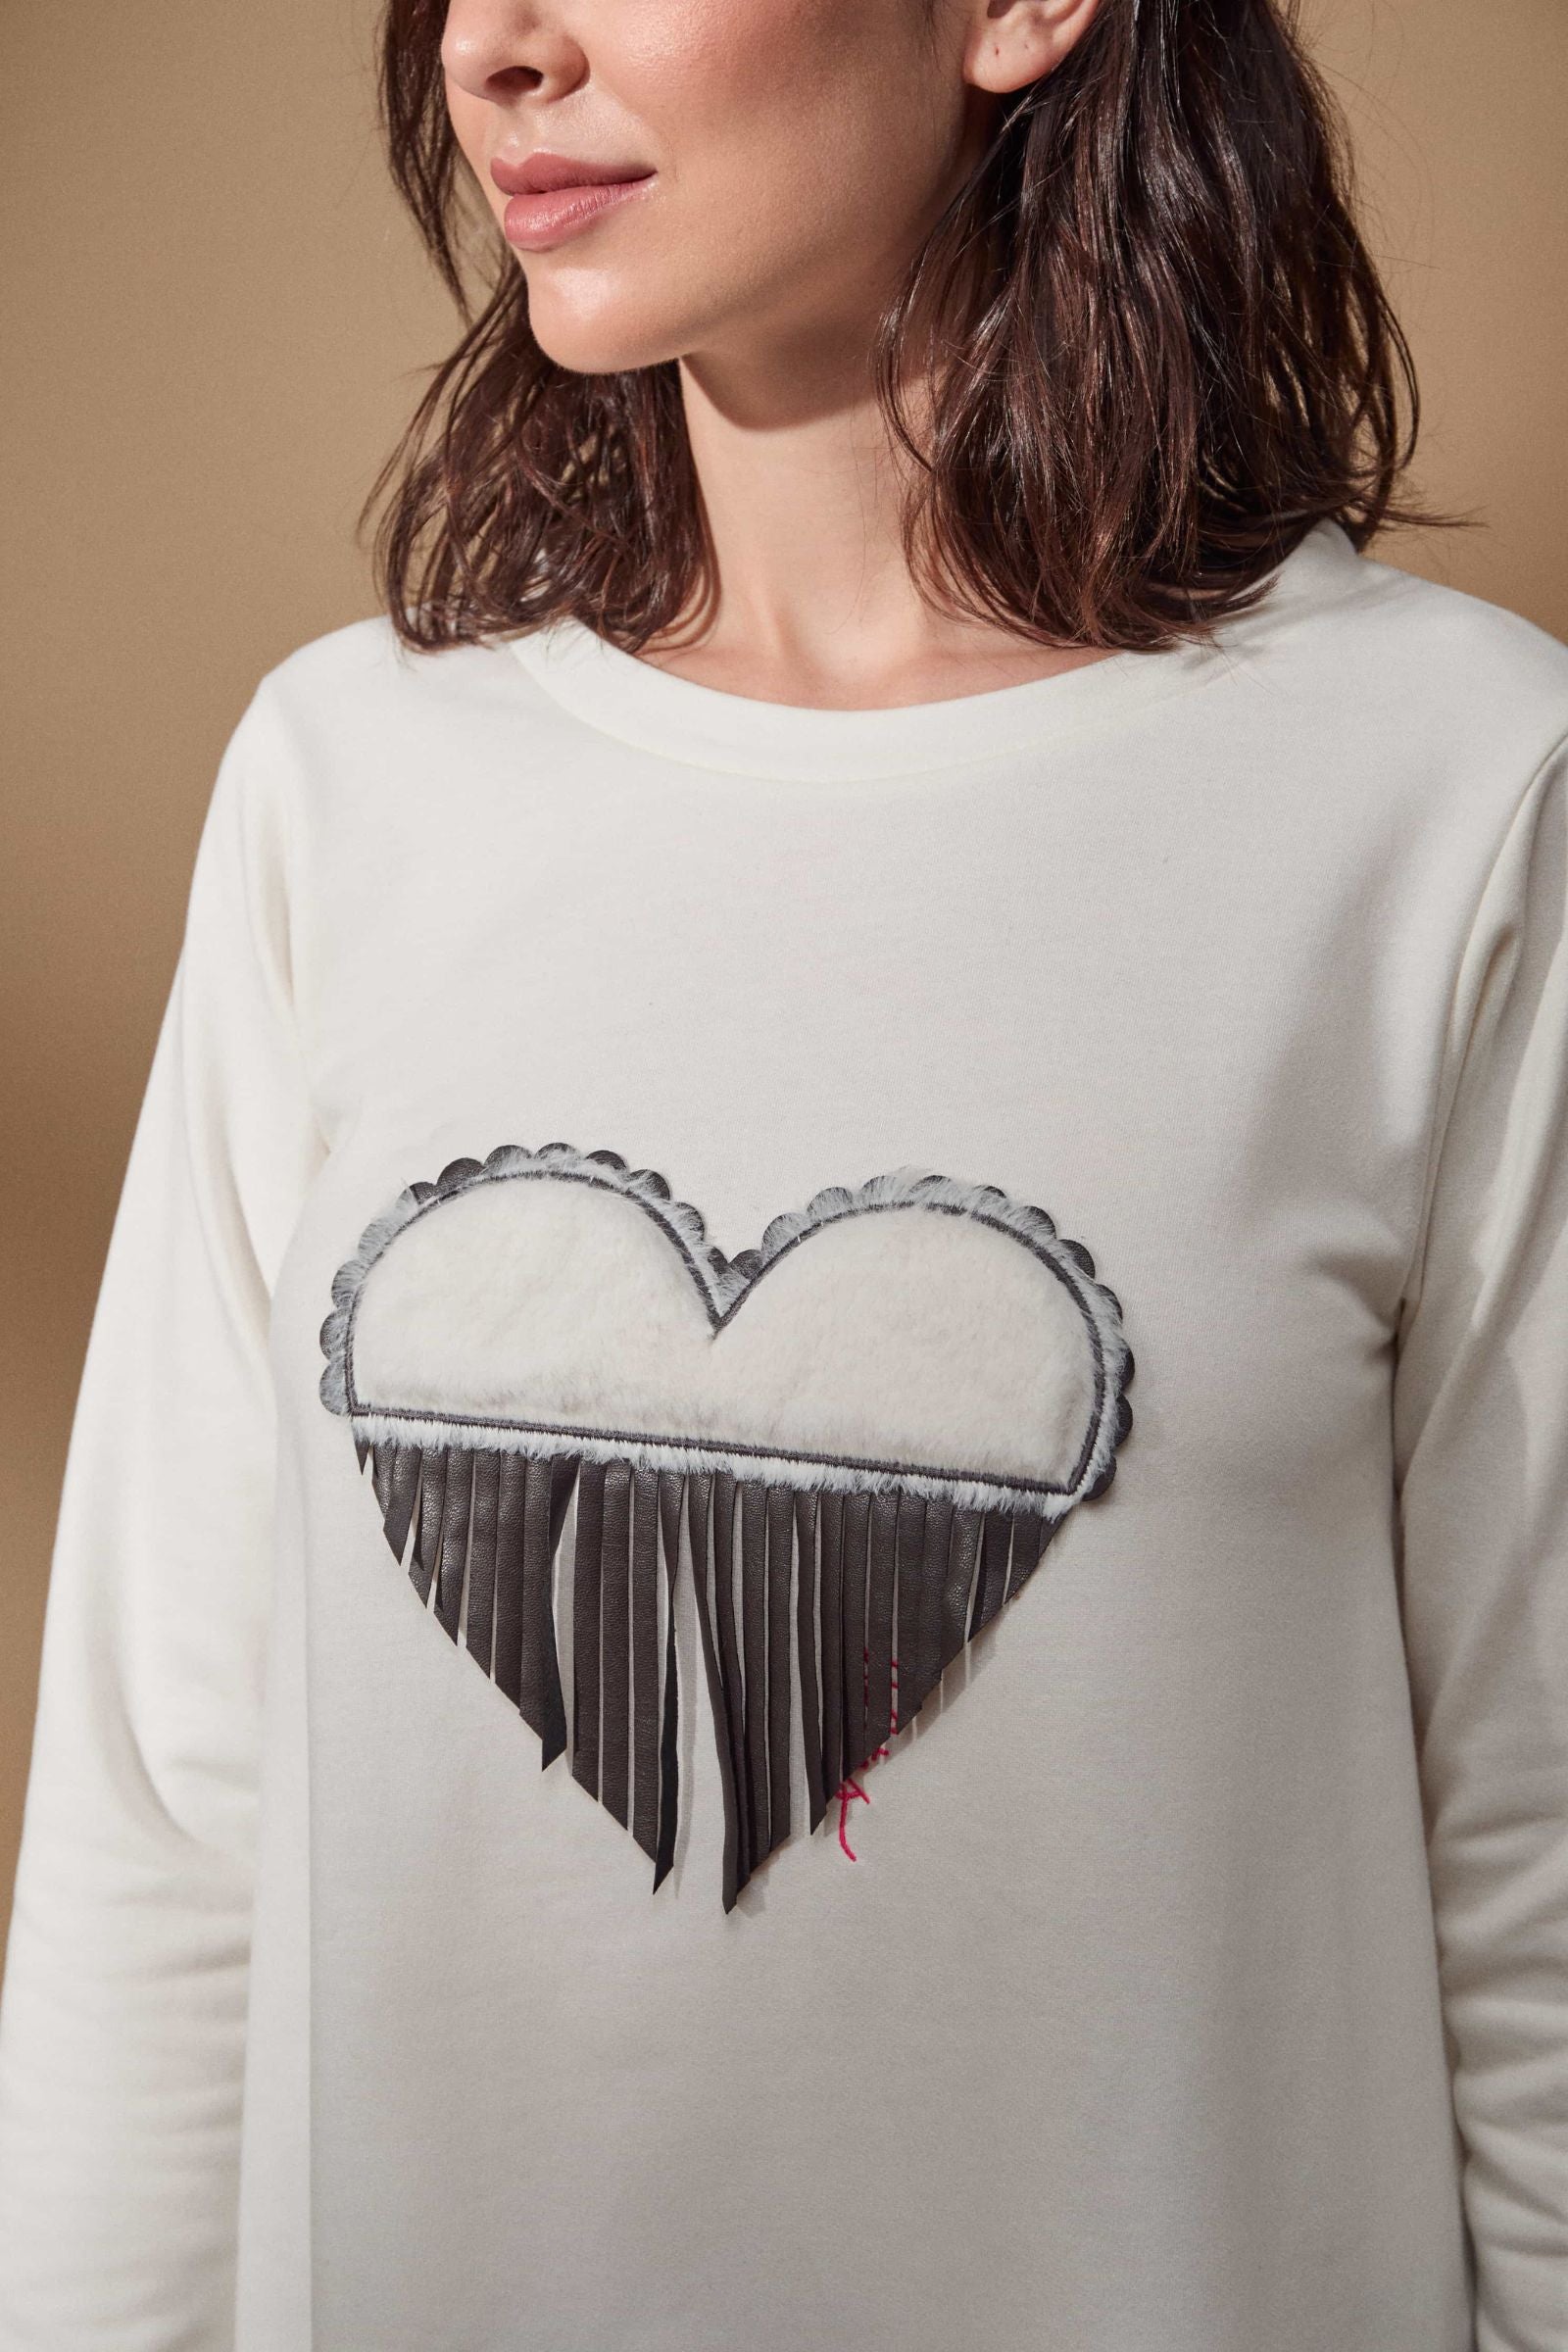 Camiseta blanca bordado corazon de flecos Lolitas - lolitasyl.com